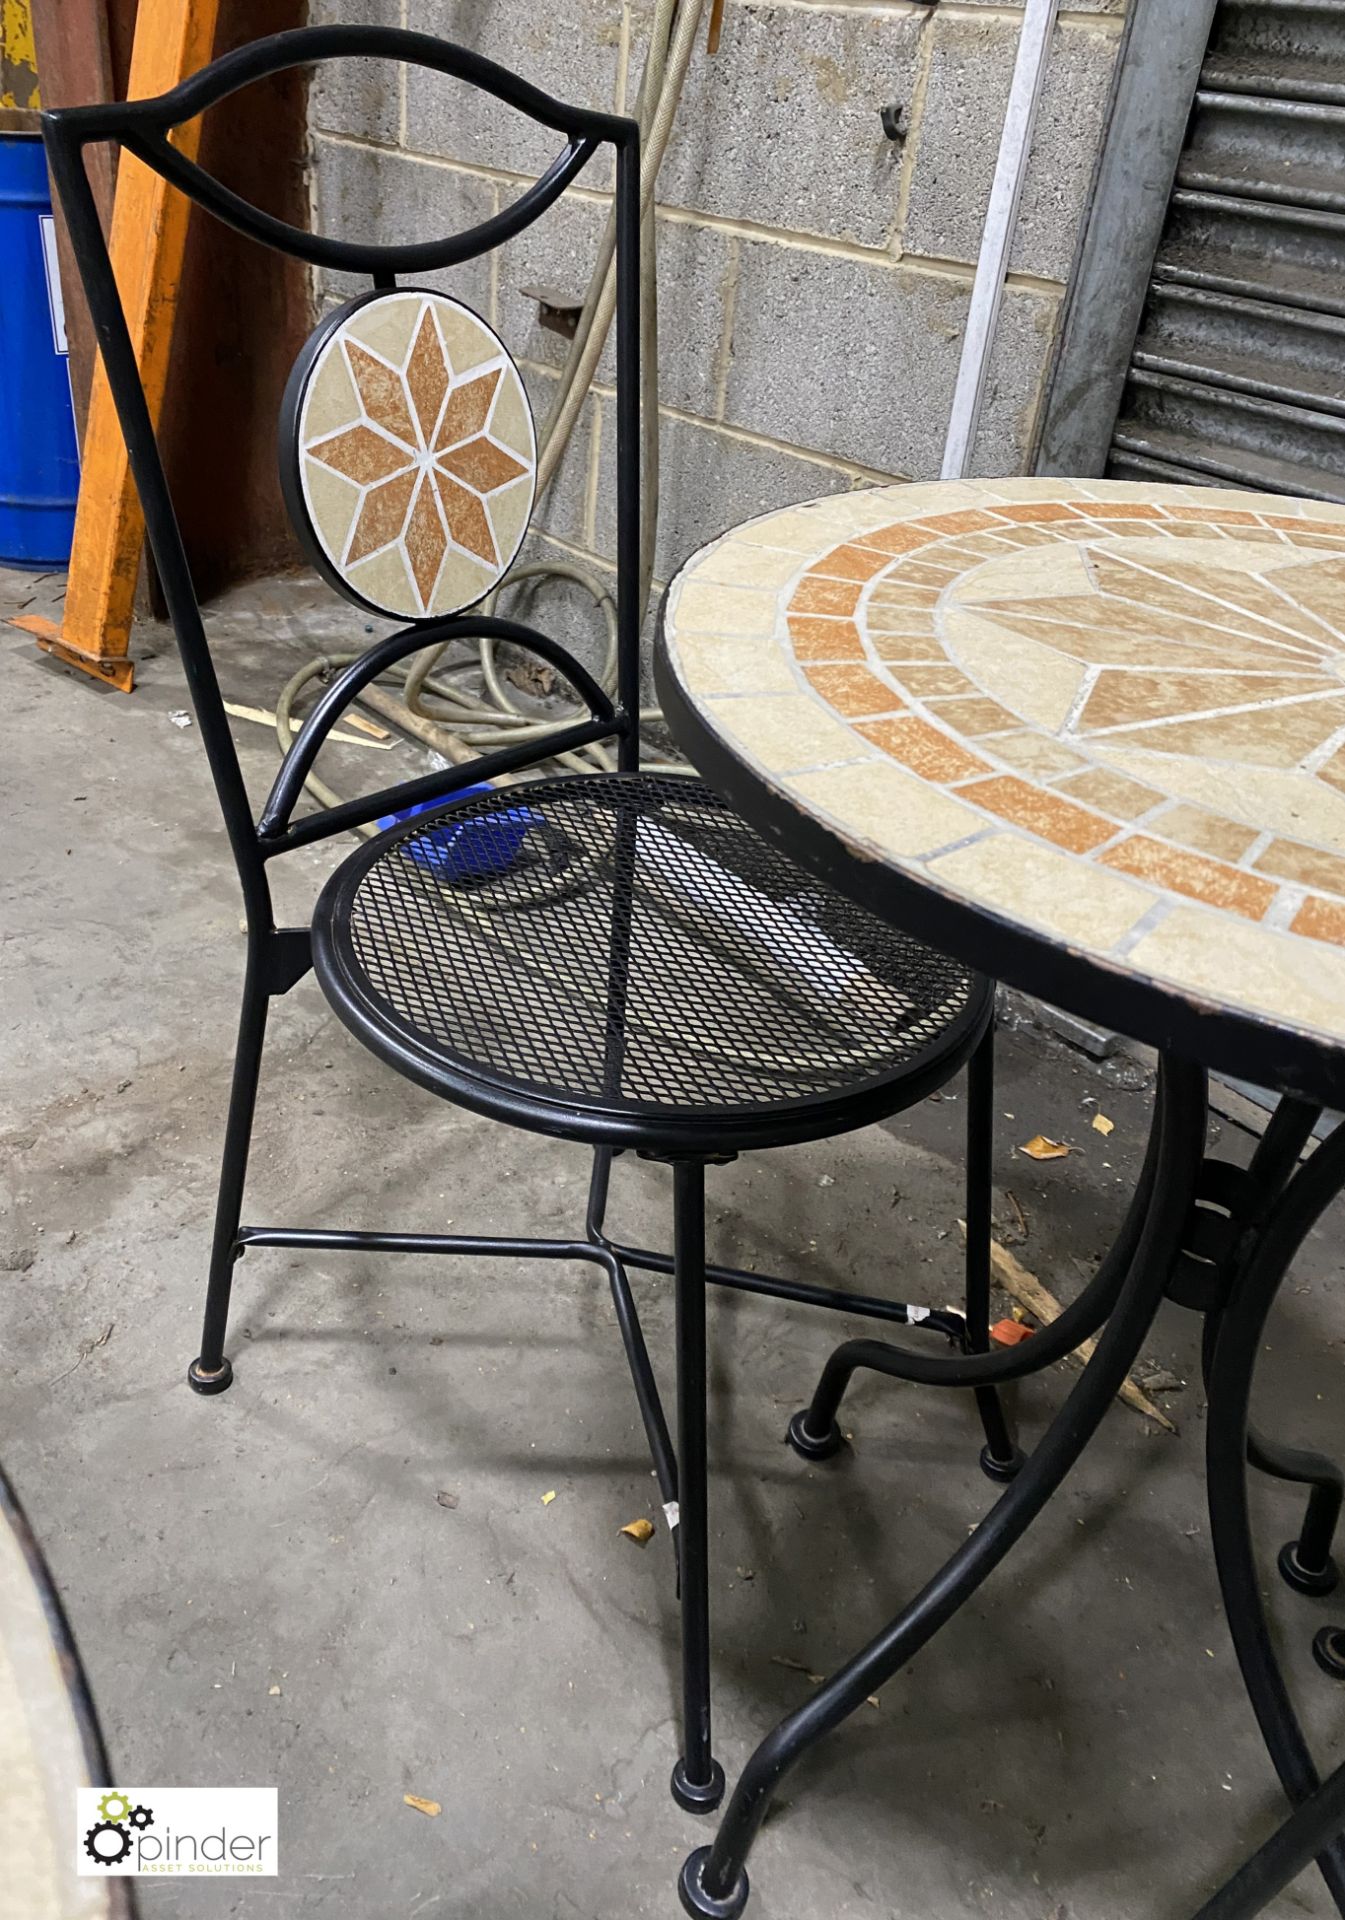 Circular tile top Café Table, 600mm diameter, with 2 café chairs - Image 3 of 4